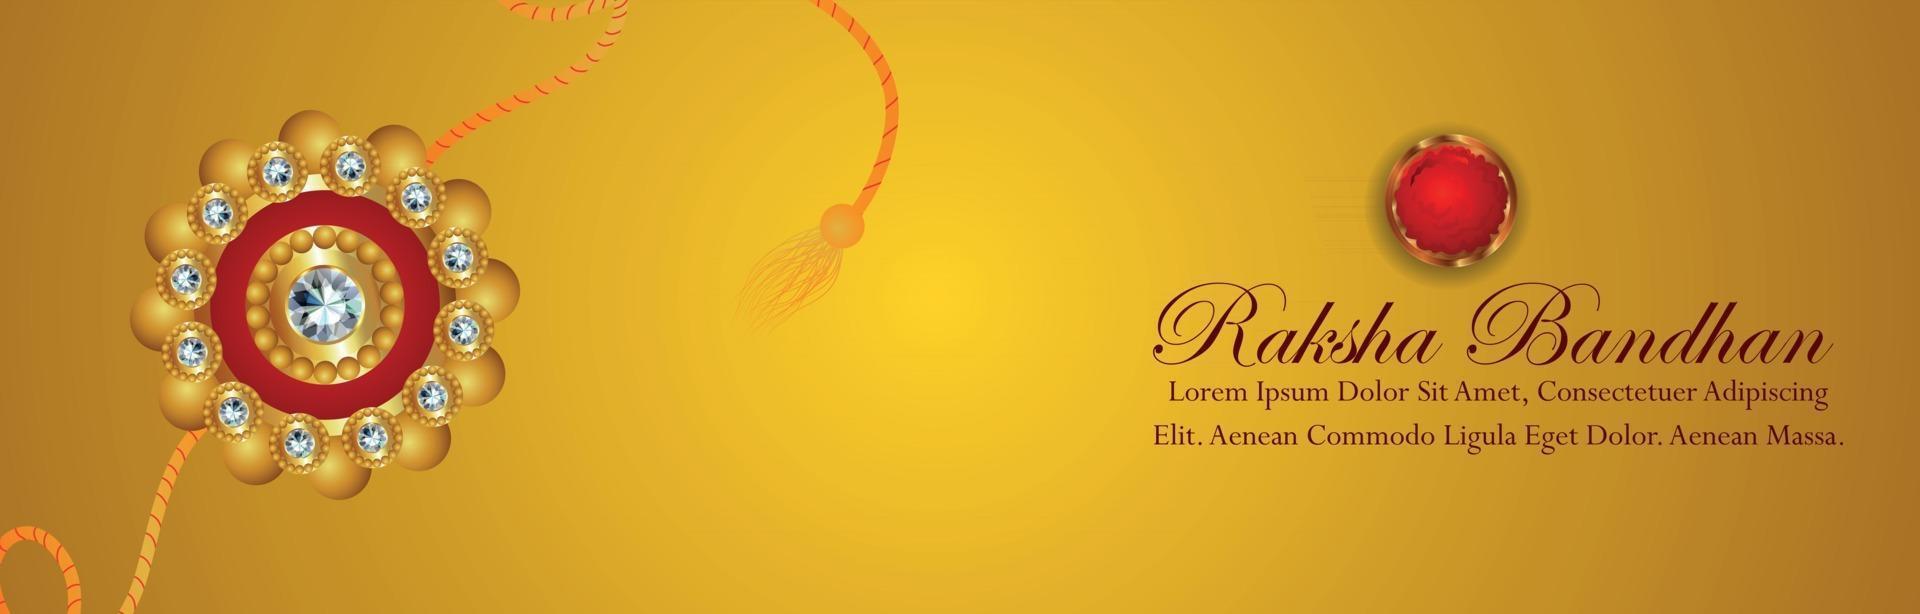 Creative vector iliustration of happy raksha bandhan celebration banner with crystal rakhi and gifts